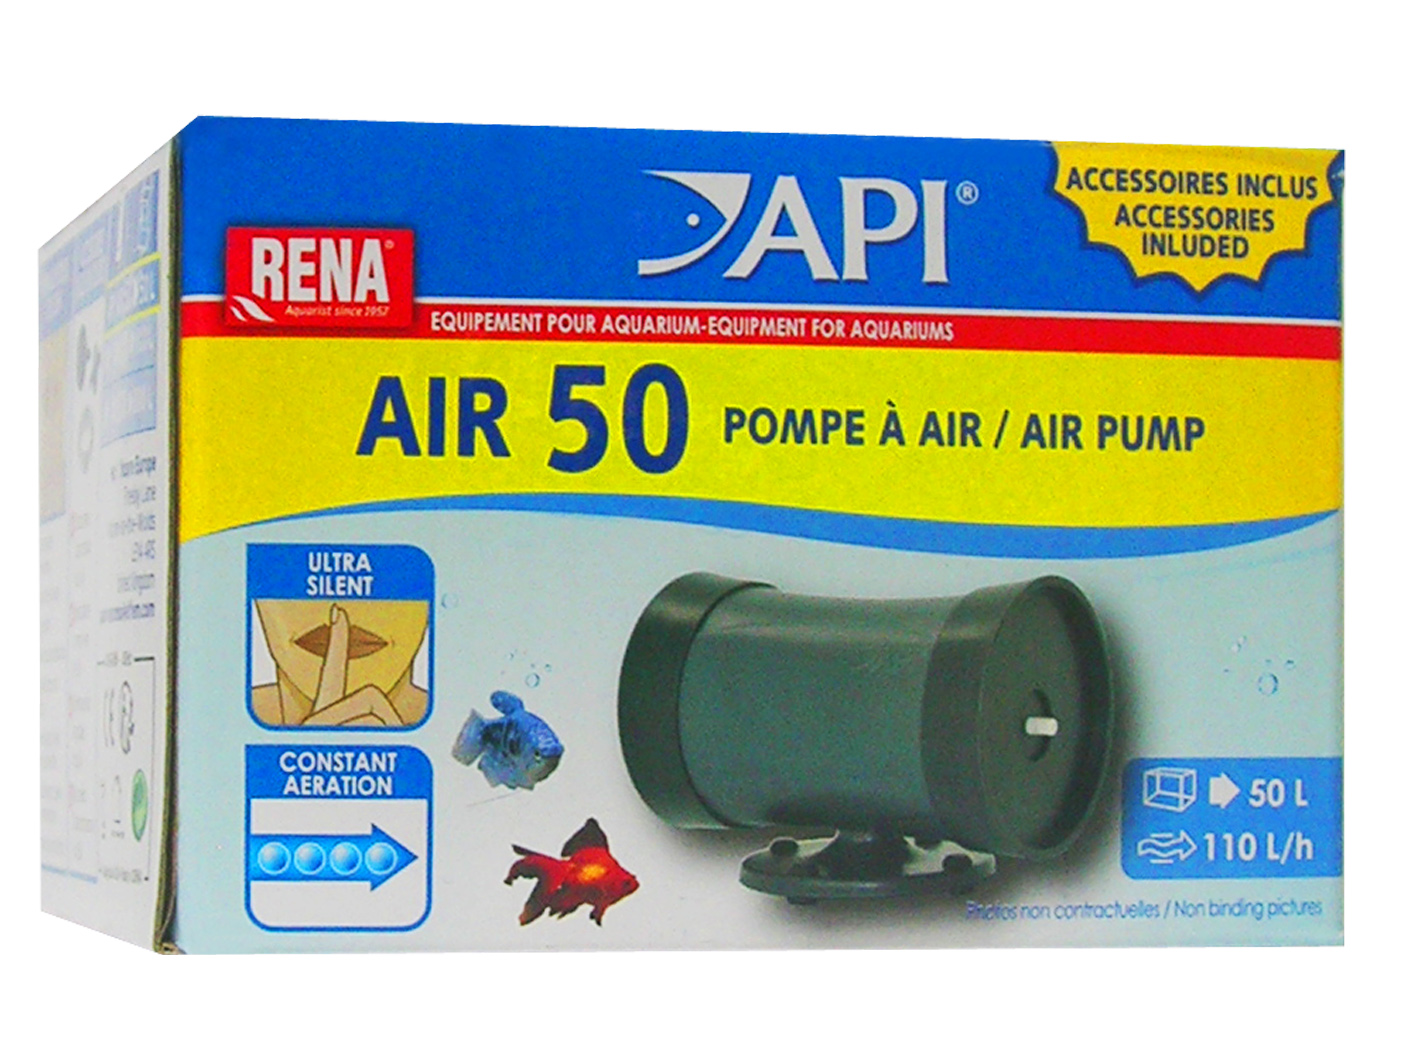 New rena air 50 - Gamm vert